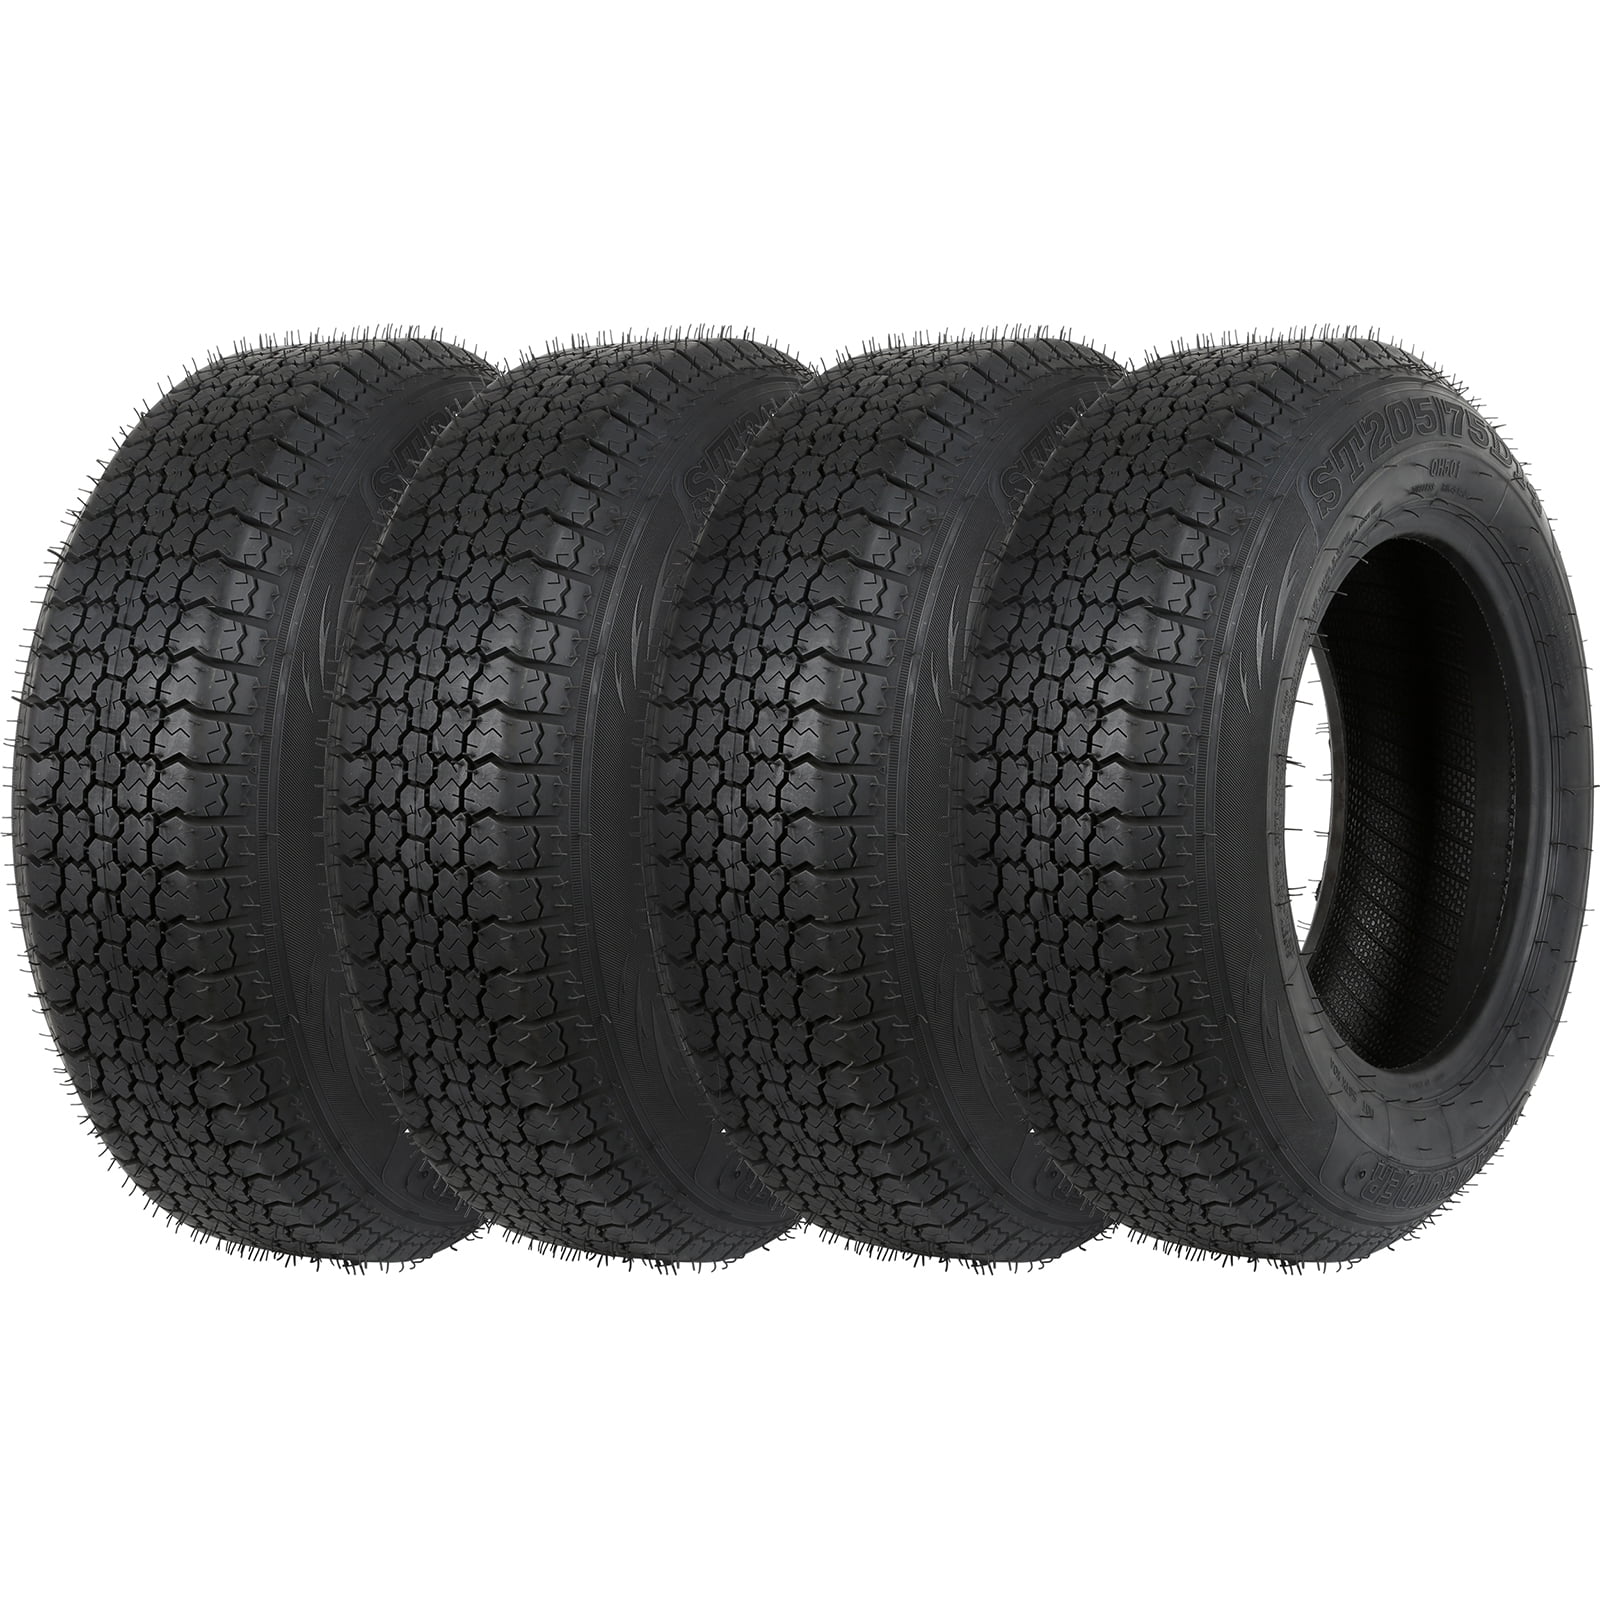 Large Radial Tire Set 4 #BT-T02RW4-U : TAM1/14 Remorque Camion 